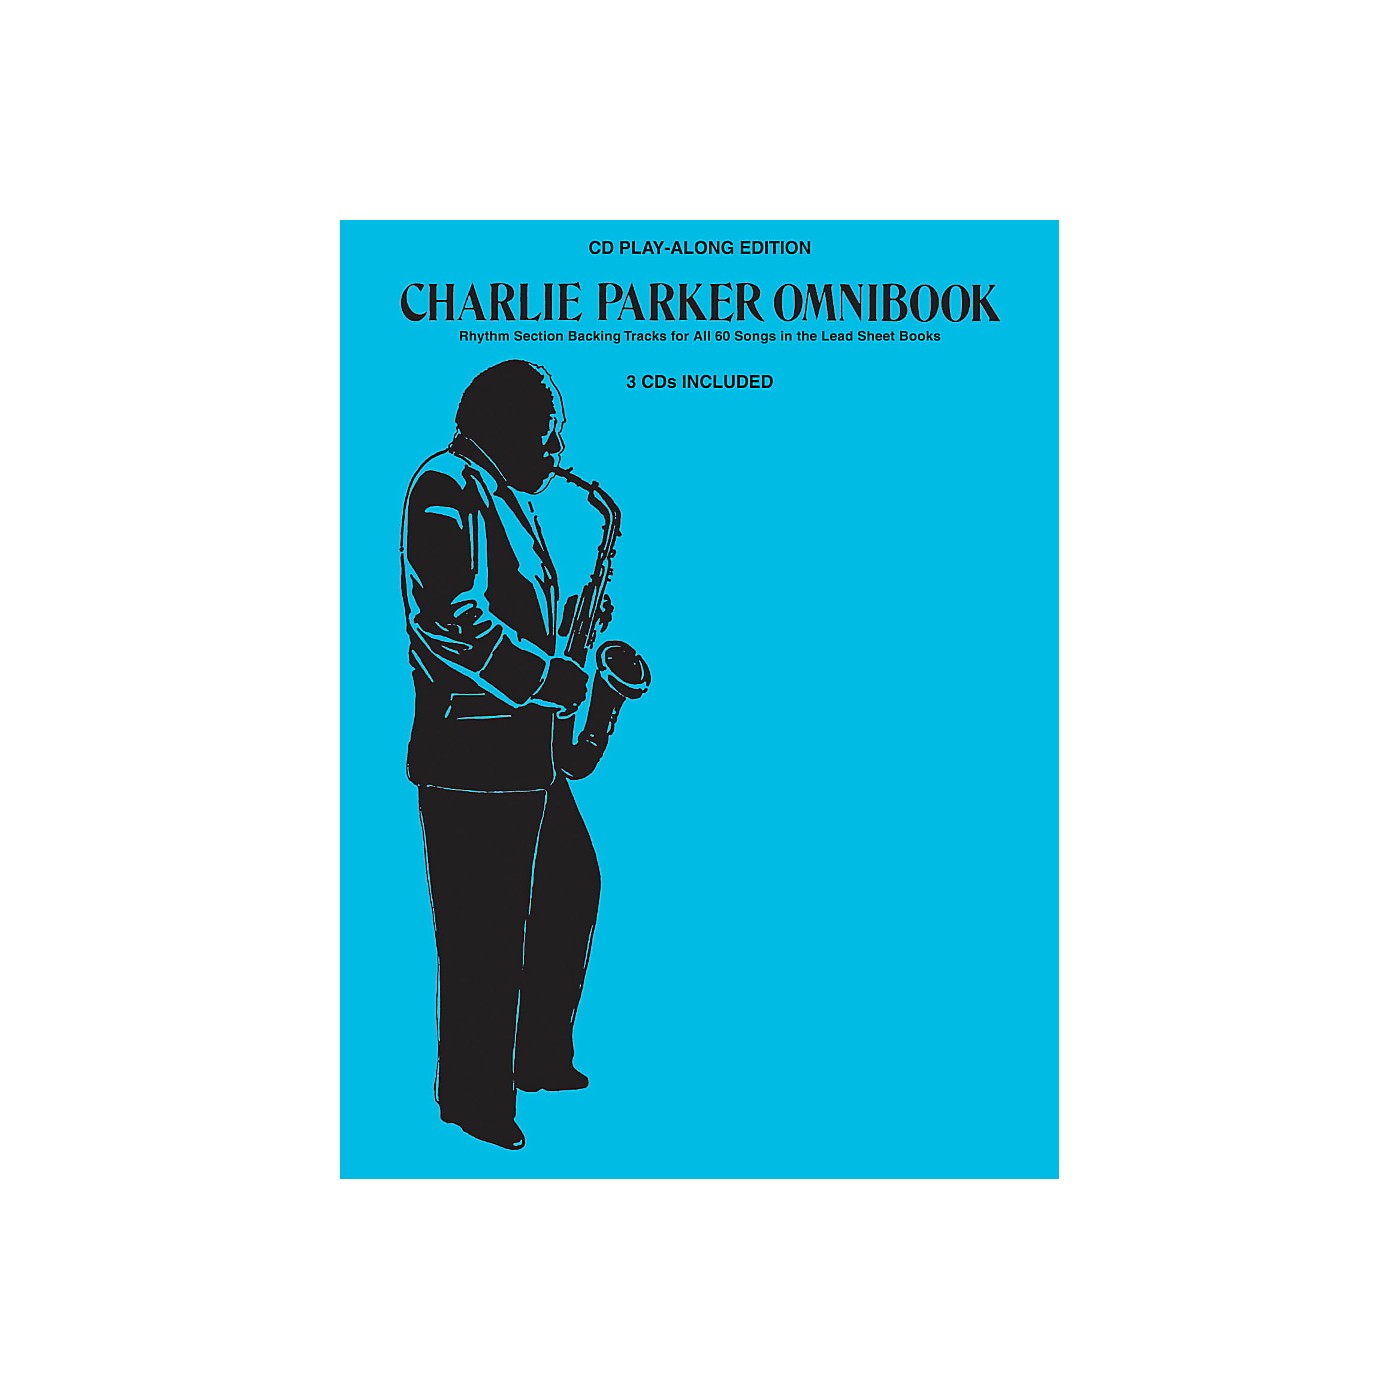 Hal Leonard Charlie Parker Omnibook - CD Play-Along Edition (3-CD Pack) thumbnail